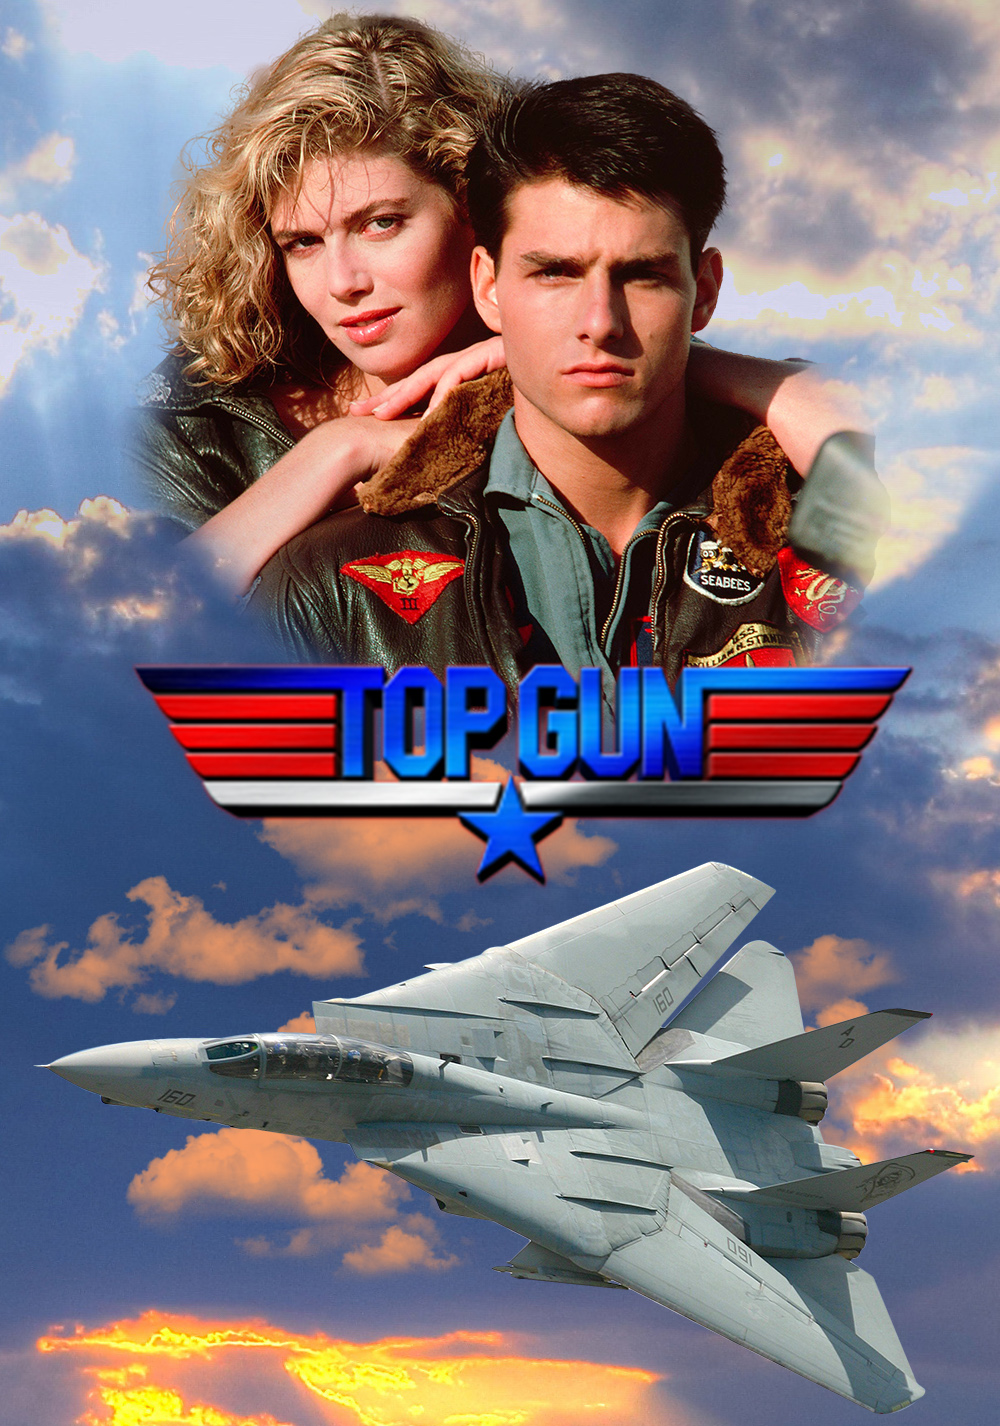 Top gun movie. Top Gun том Круз. Топ Ган Мэверик 1986. Top Gun 1986 Постер.